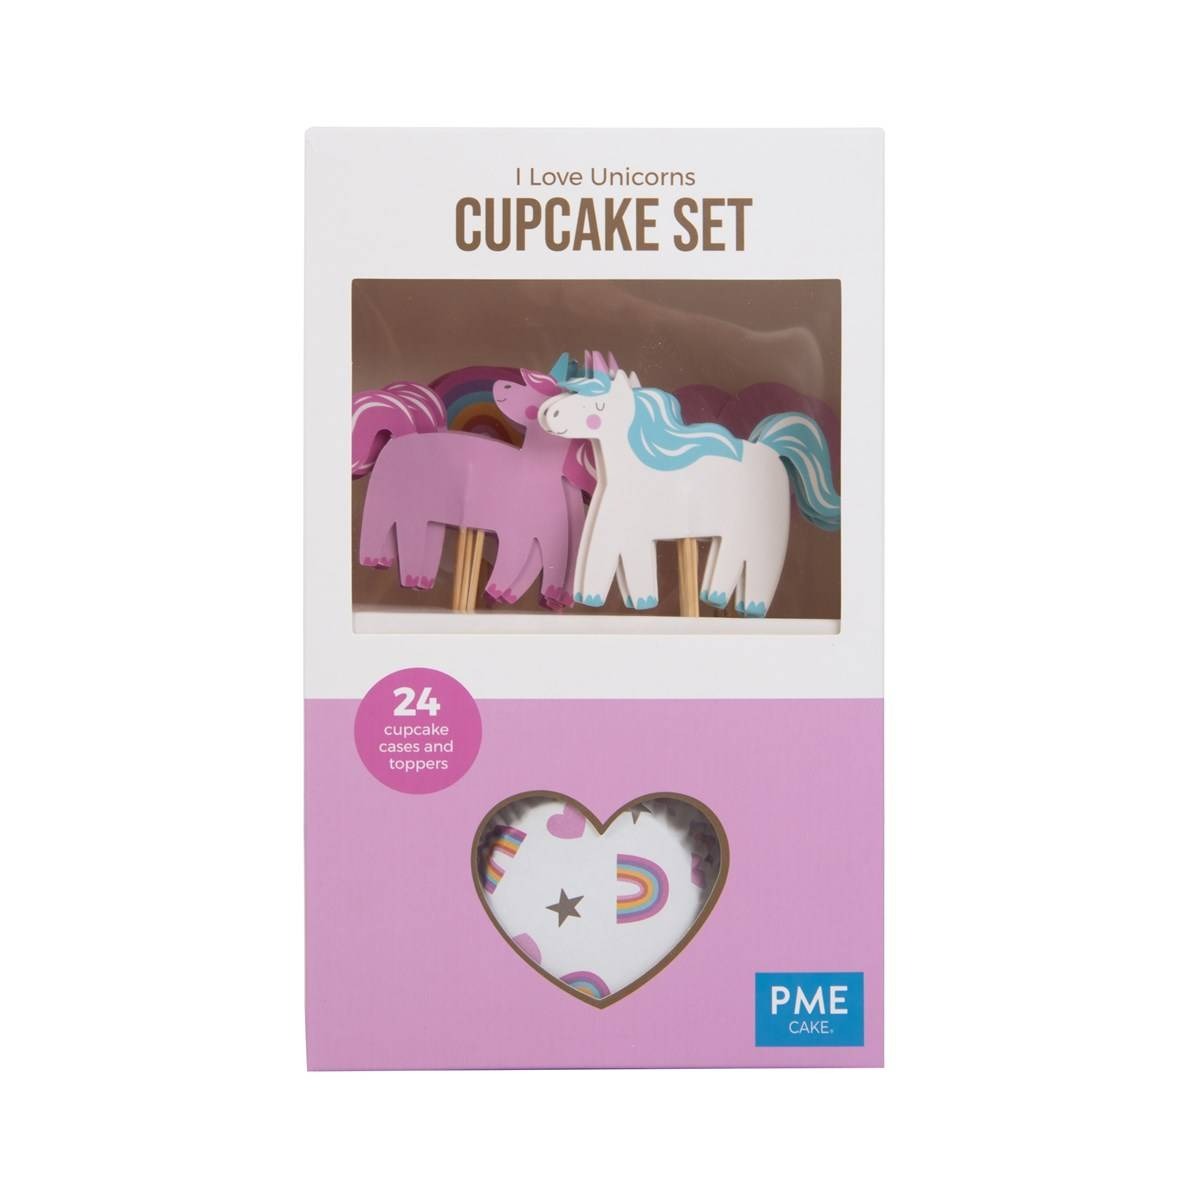 Cupcake set unicorn